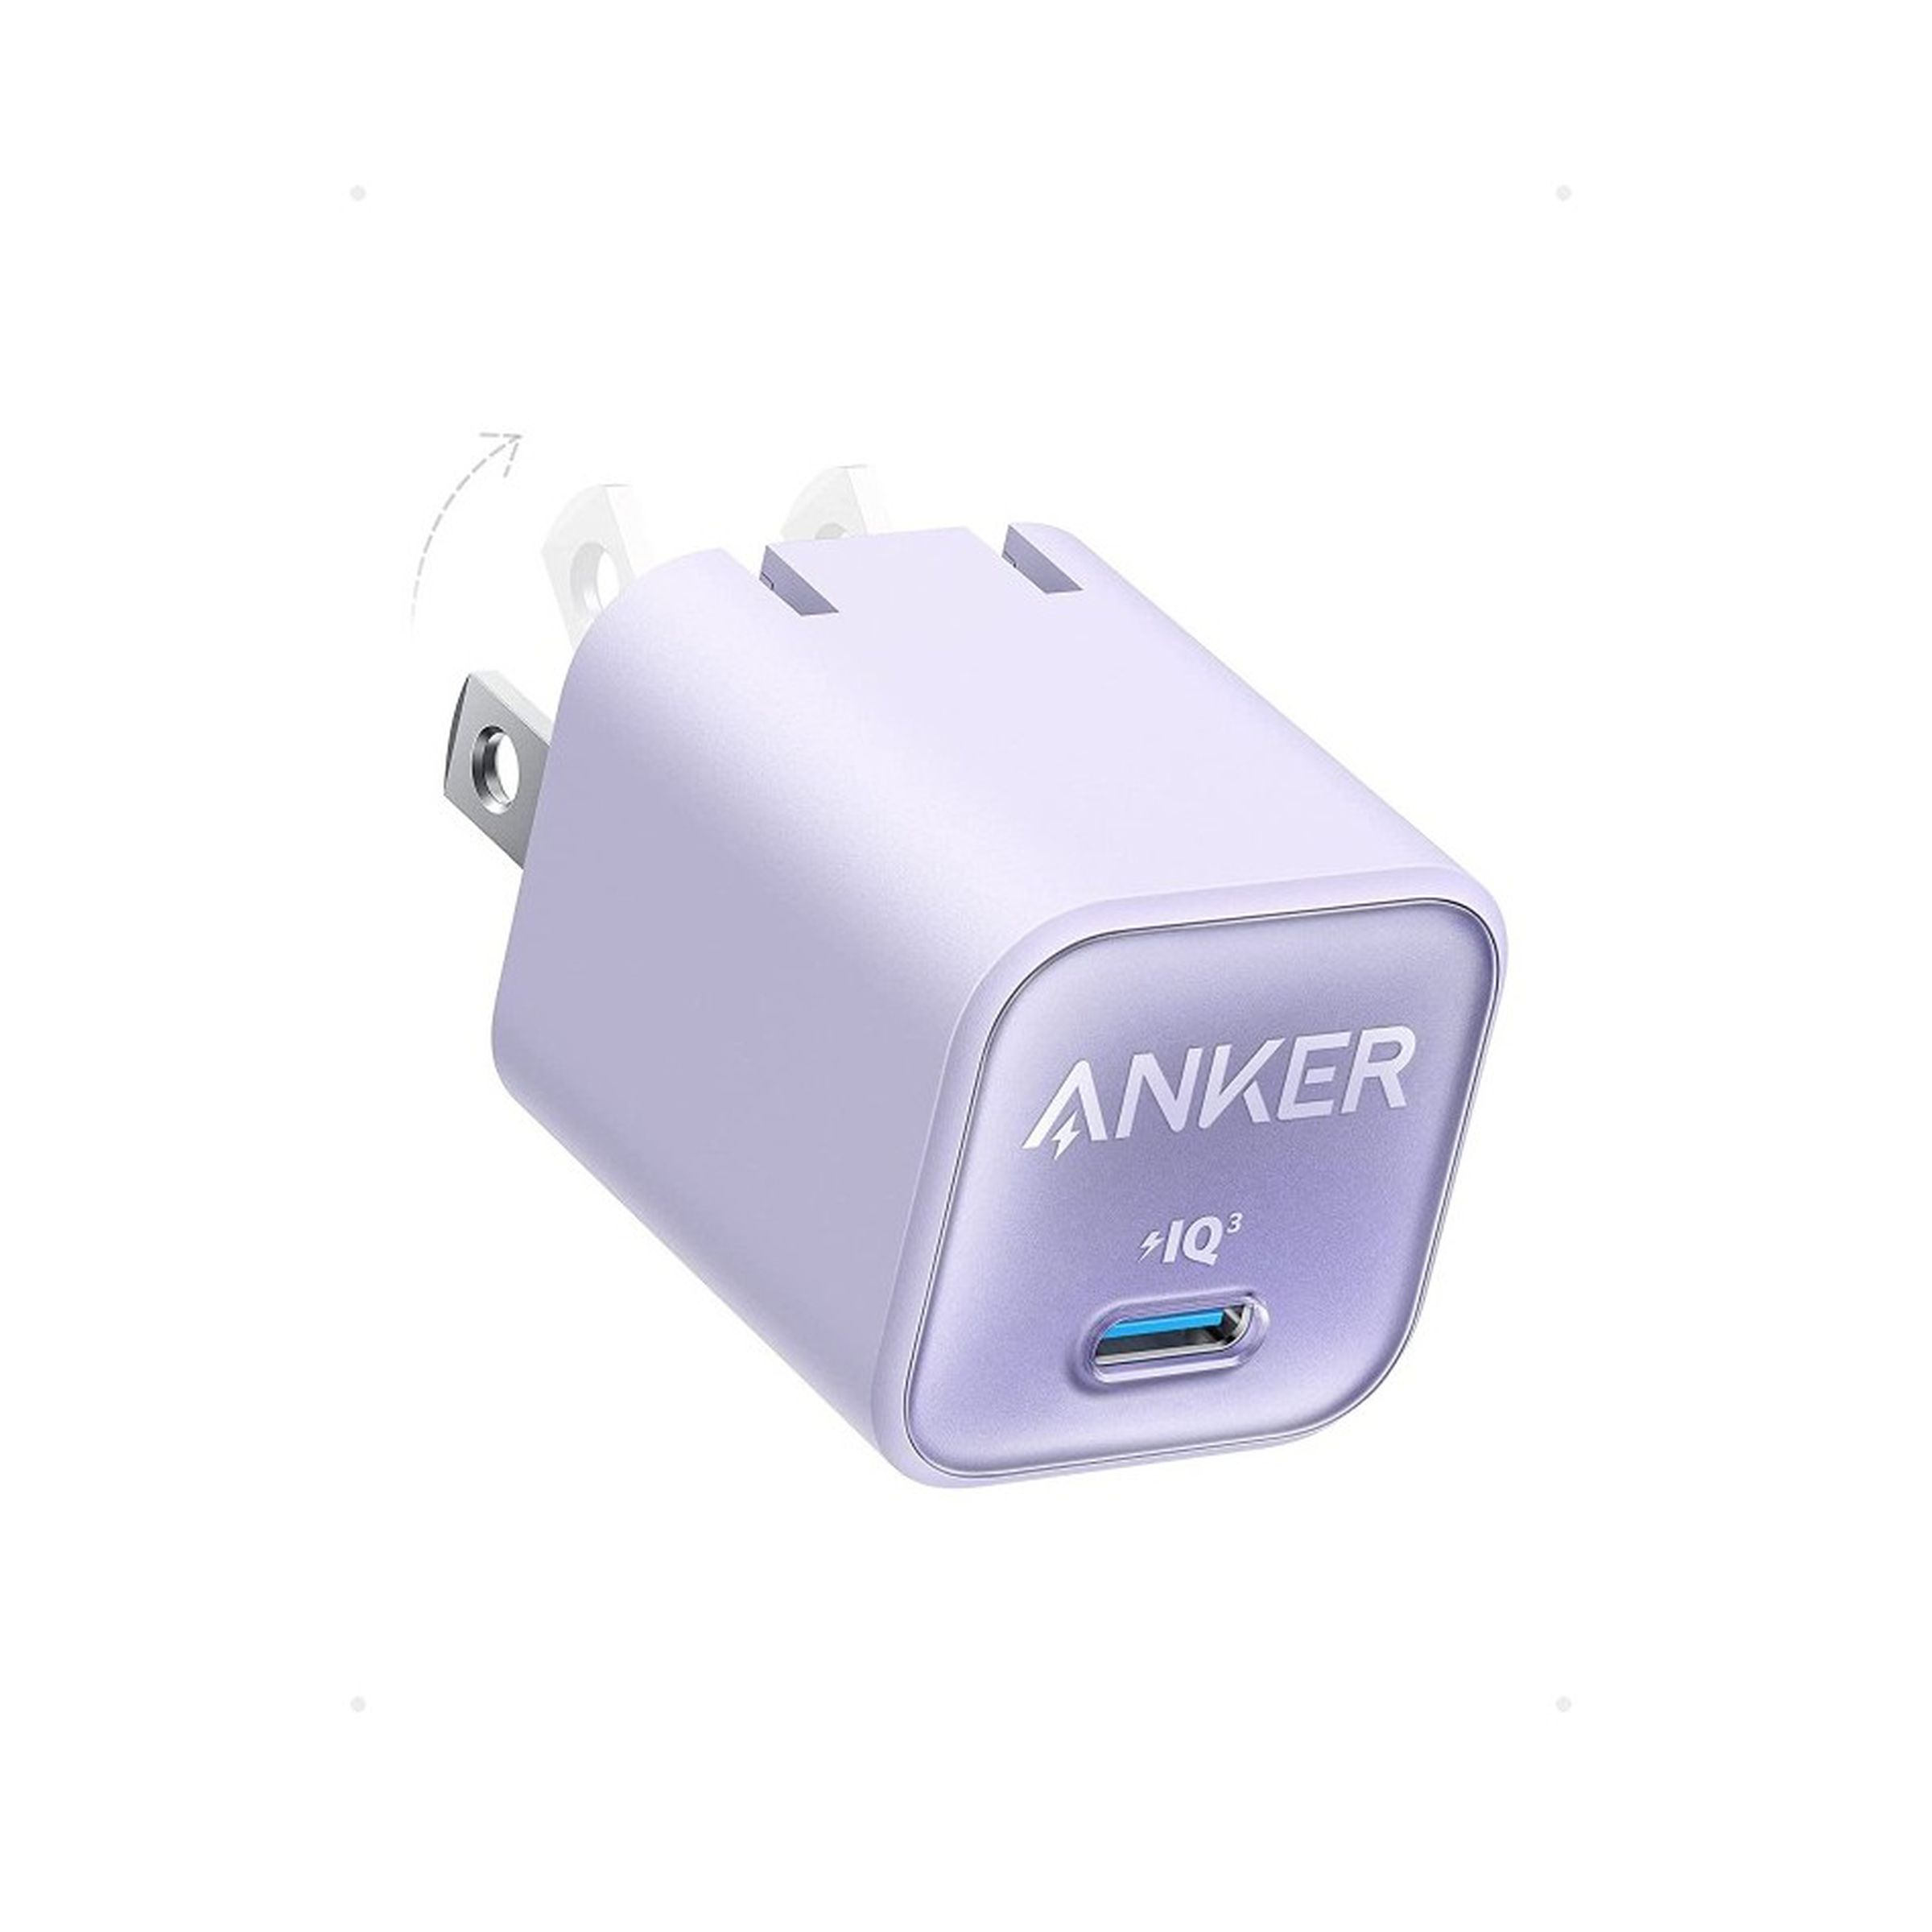 ankernano511charger